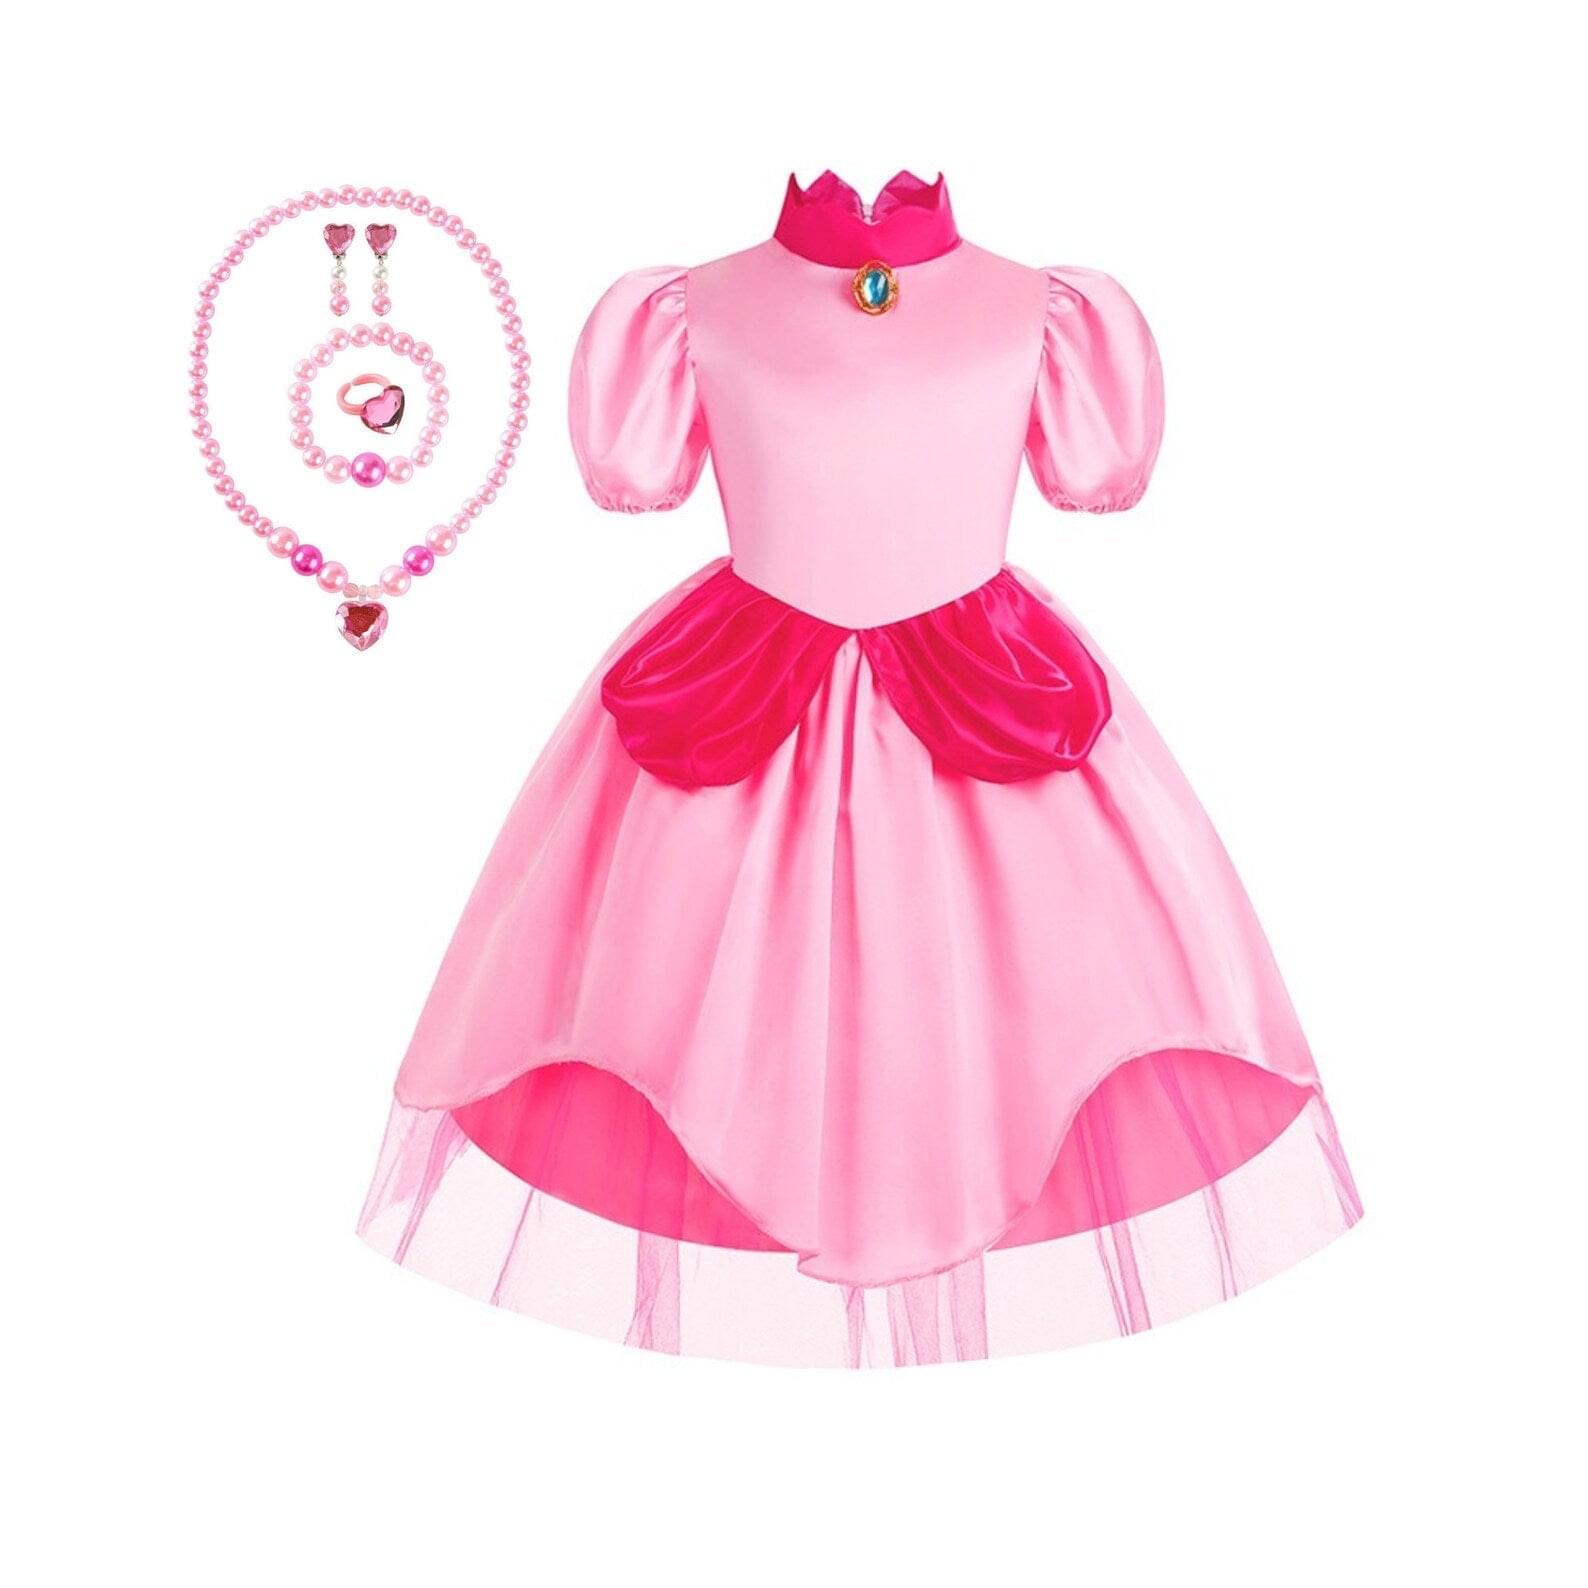 Disney-Inspired Mario Bros Princess Peach Dress, Perfect for Halloween and Birthdays